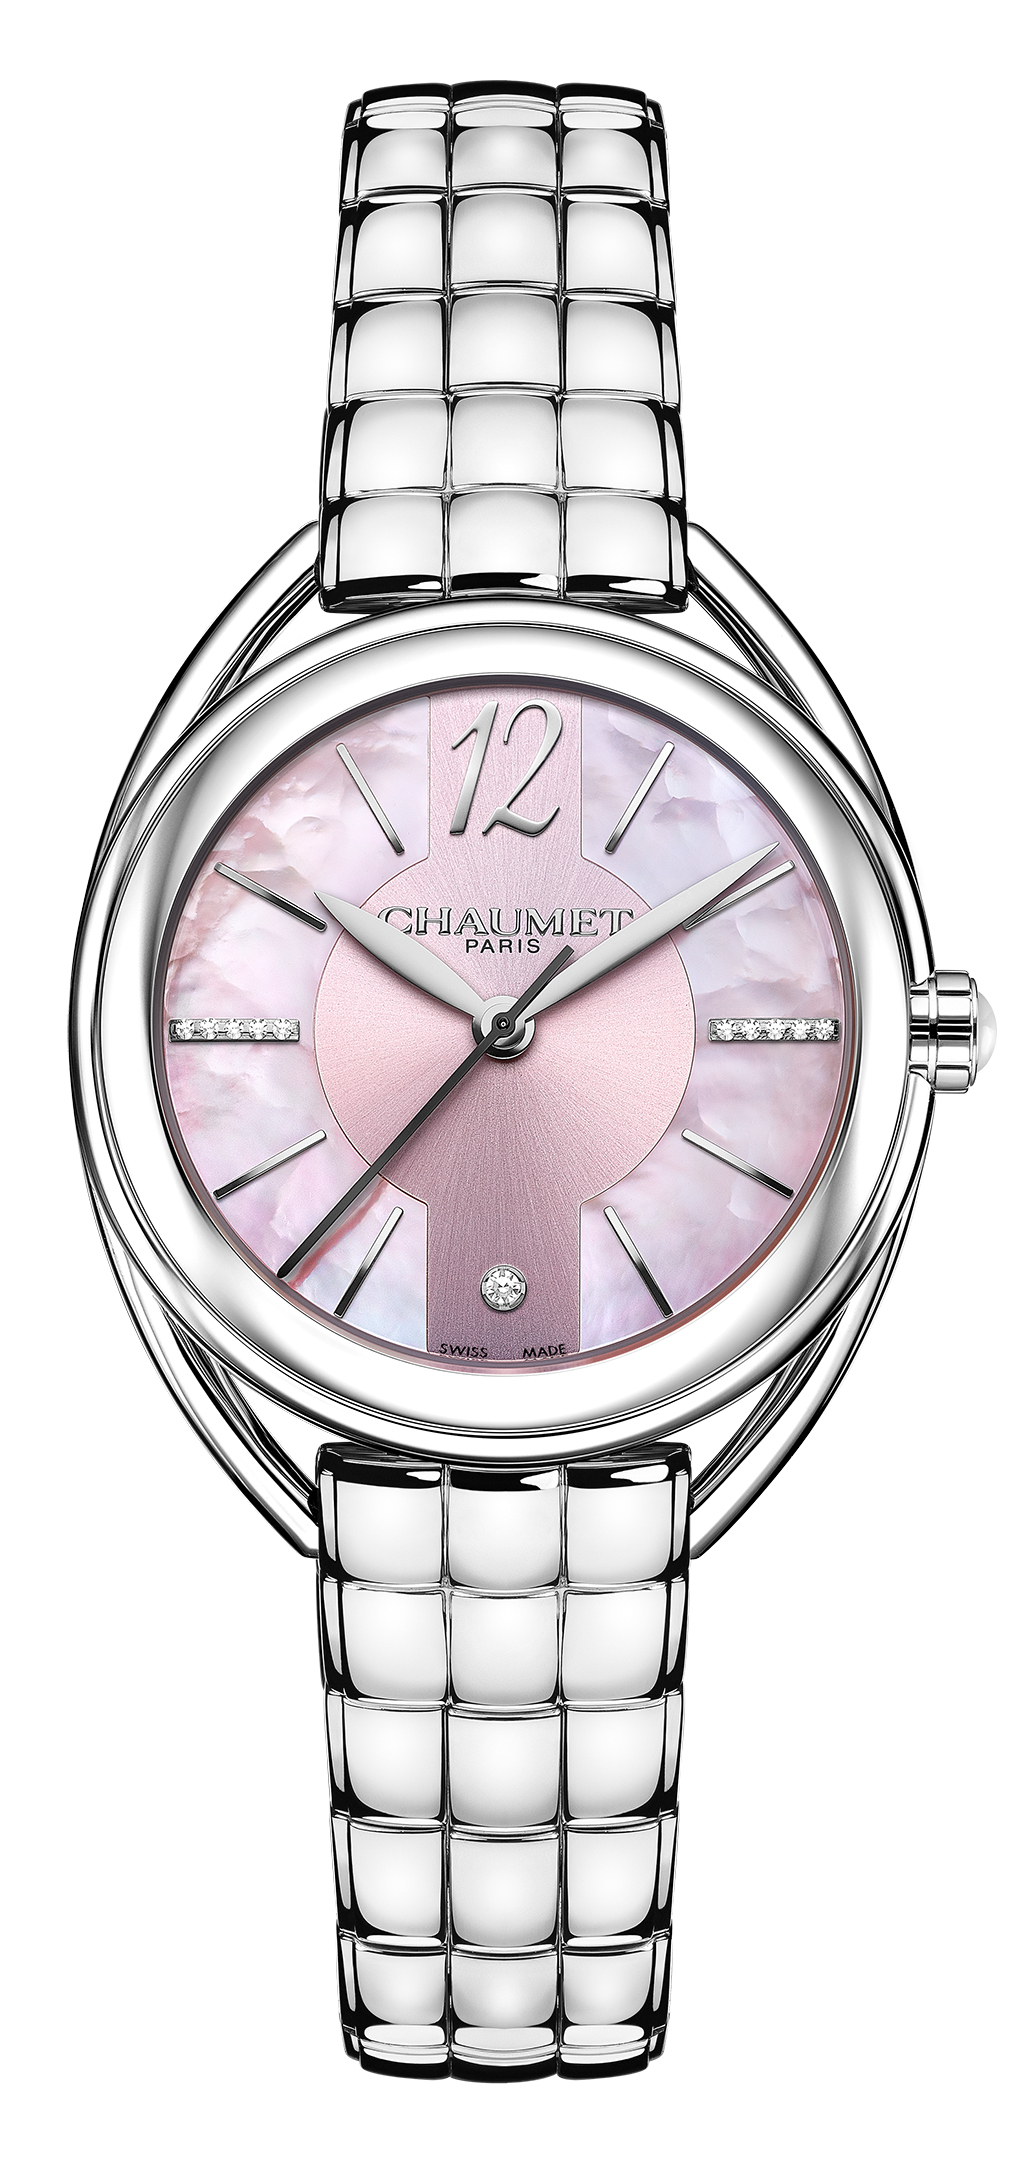 Wln女子部発 手首を可愛く上品に演出 ピンクパールの腕時計オススメ3モデル Watch Life News ウオッチライフを楽しむ時計 総合ニュースサイト